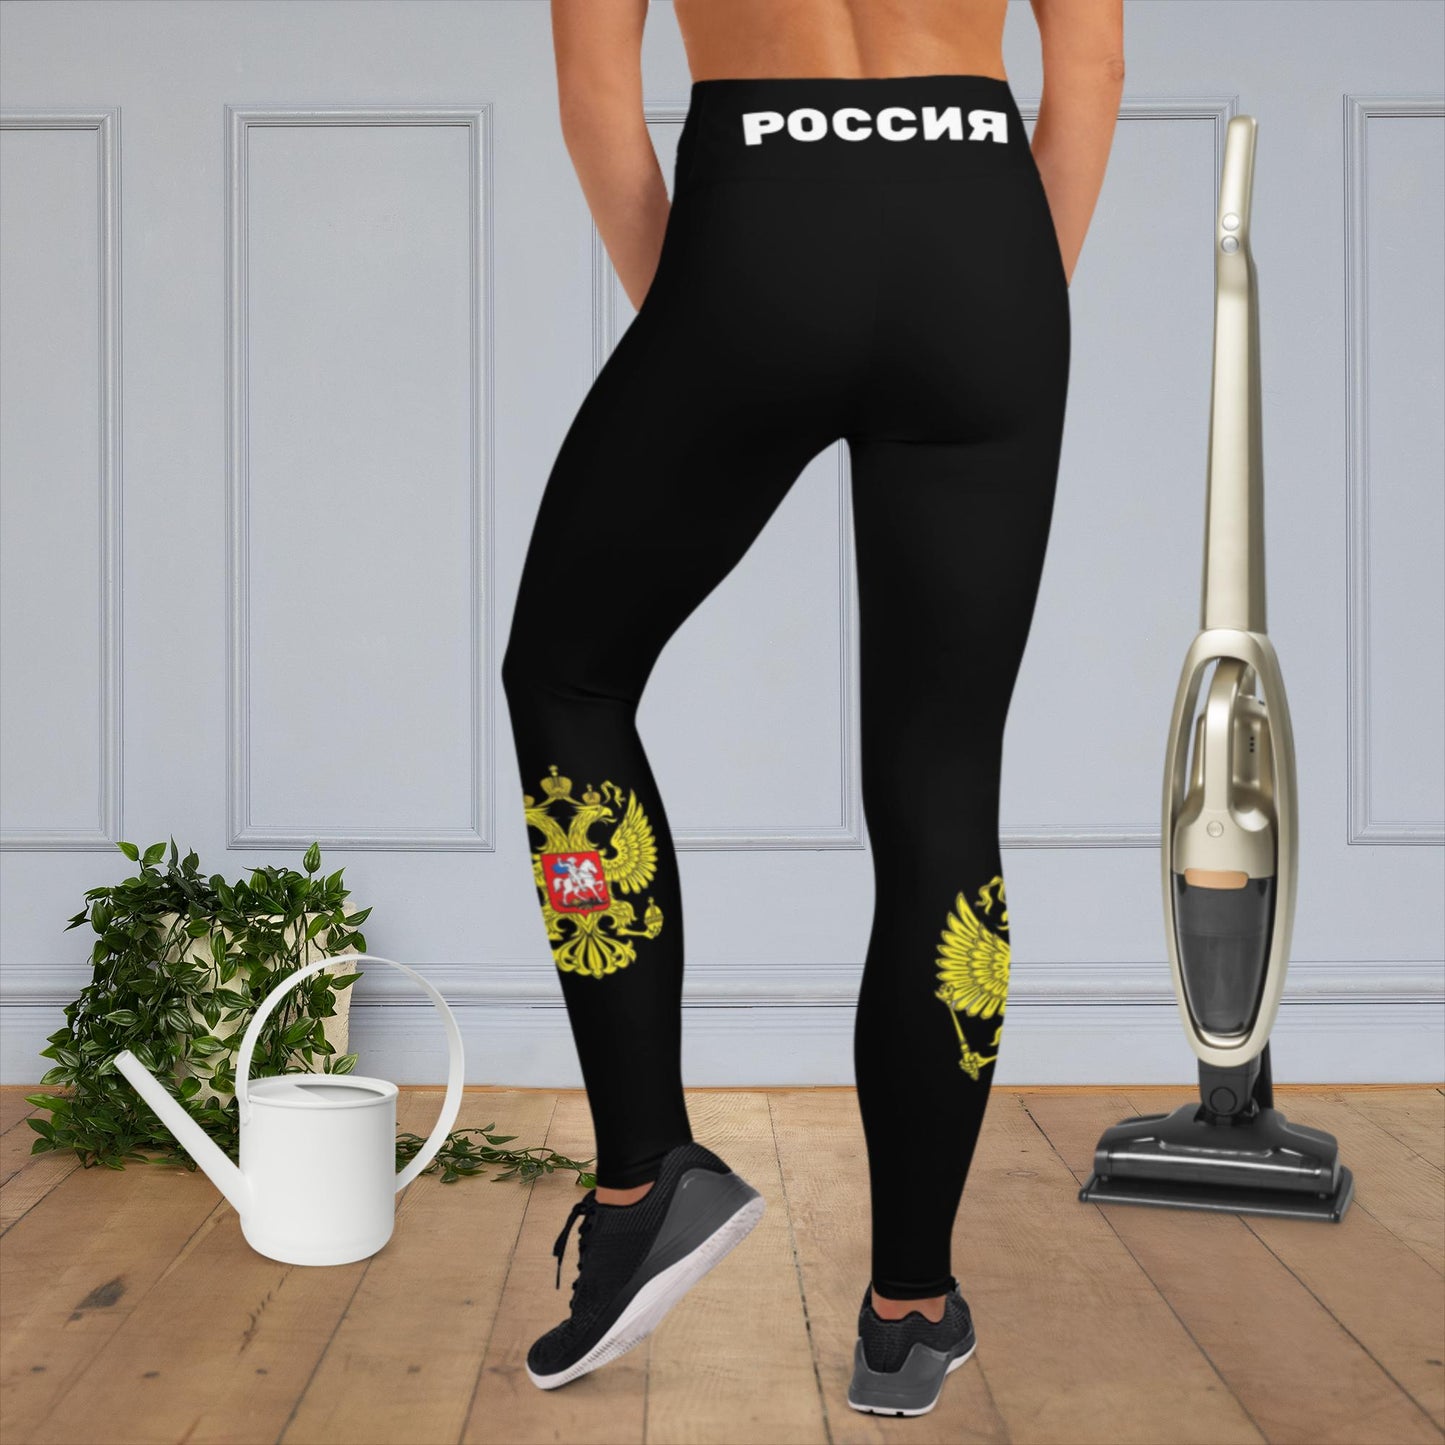 Yoga-Leggings mit Russland-Wappen in schwarz